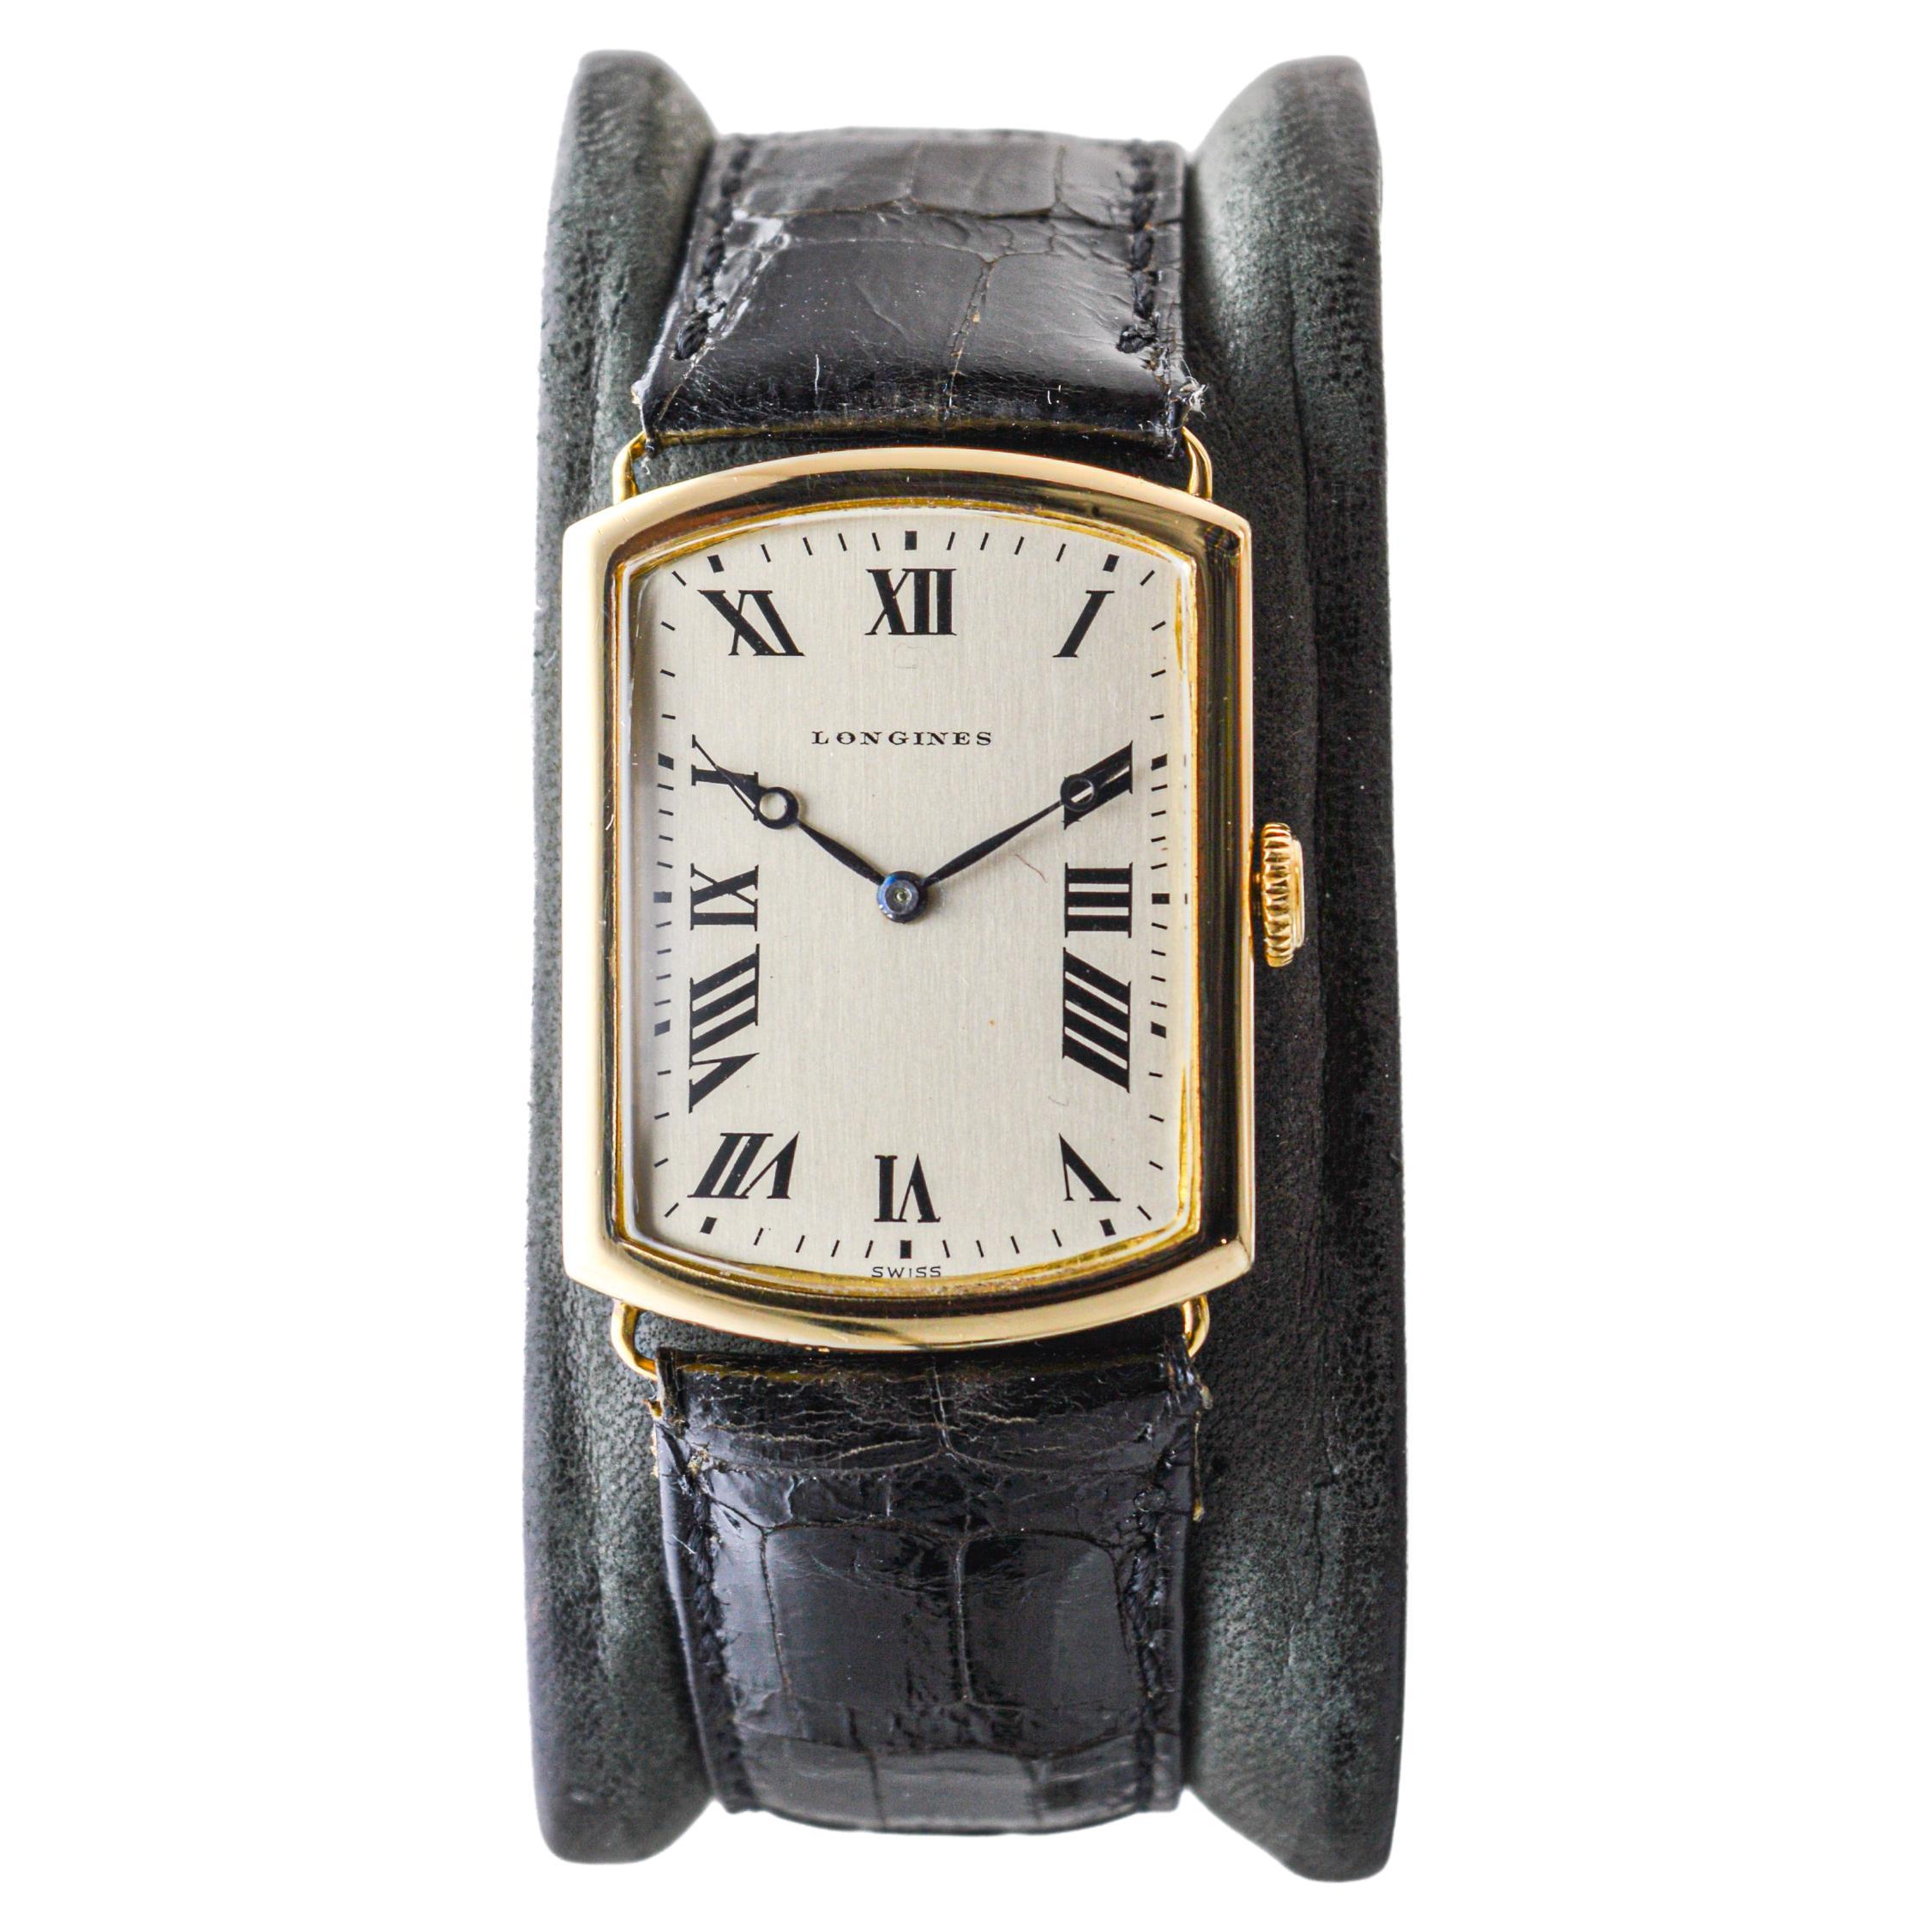 1930 longines watches